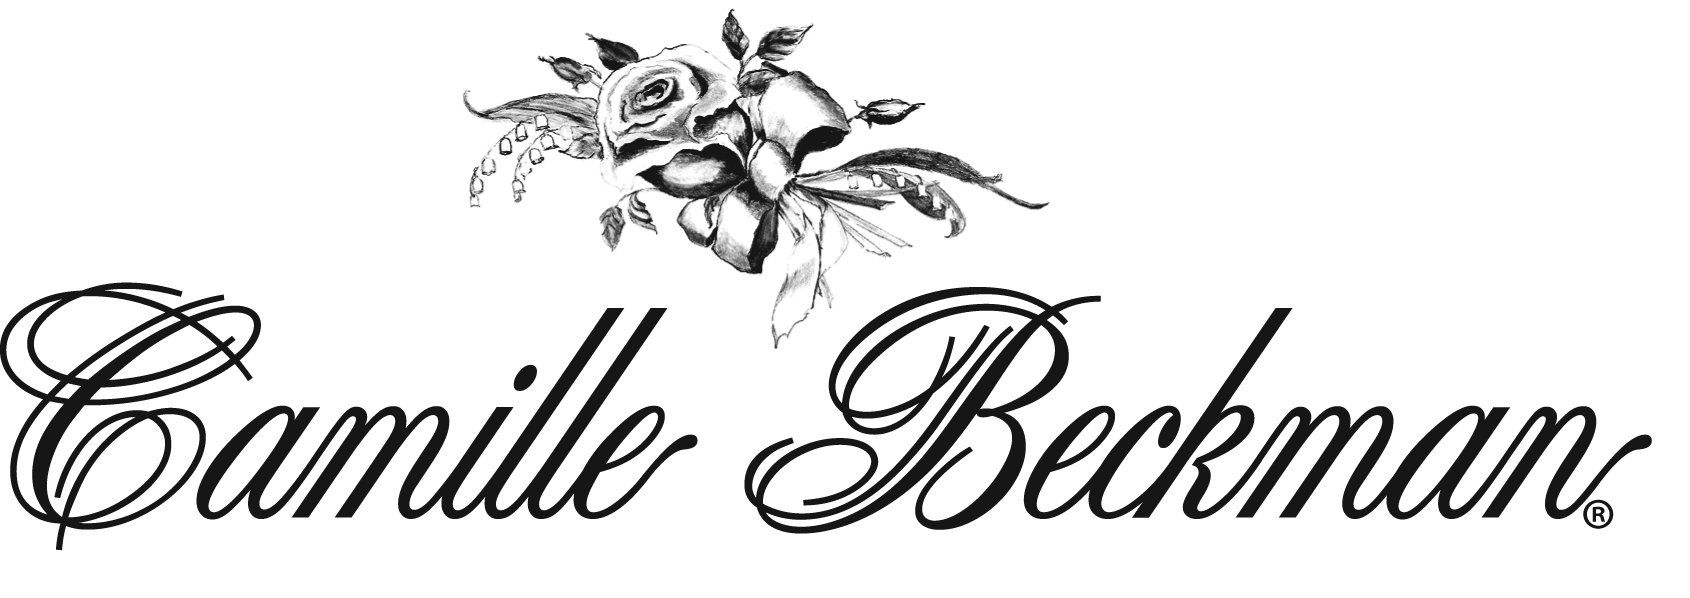 Camille Beckman Logo